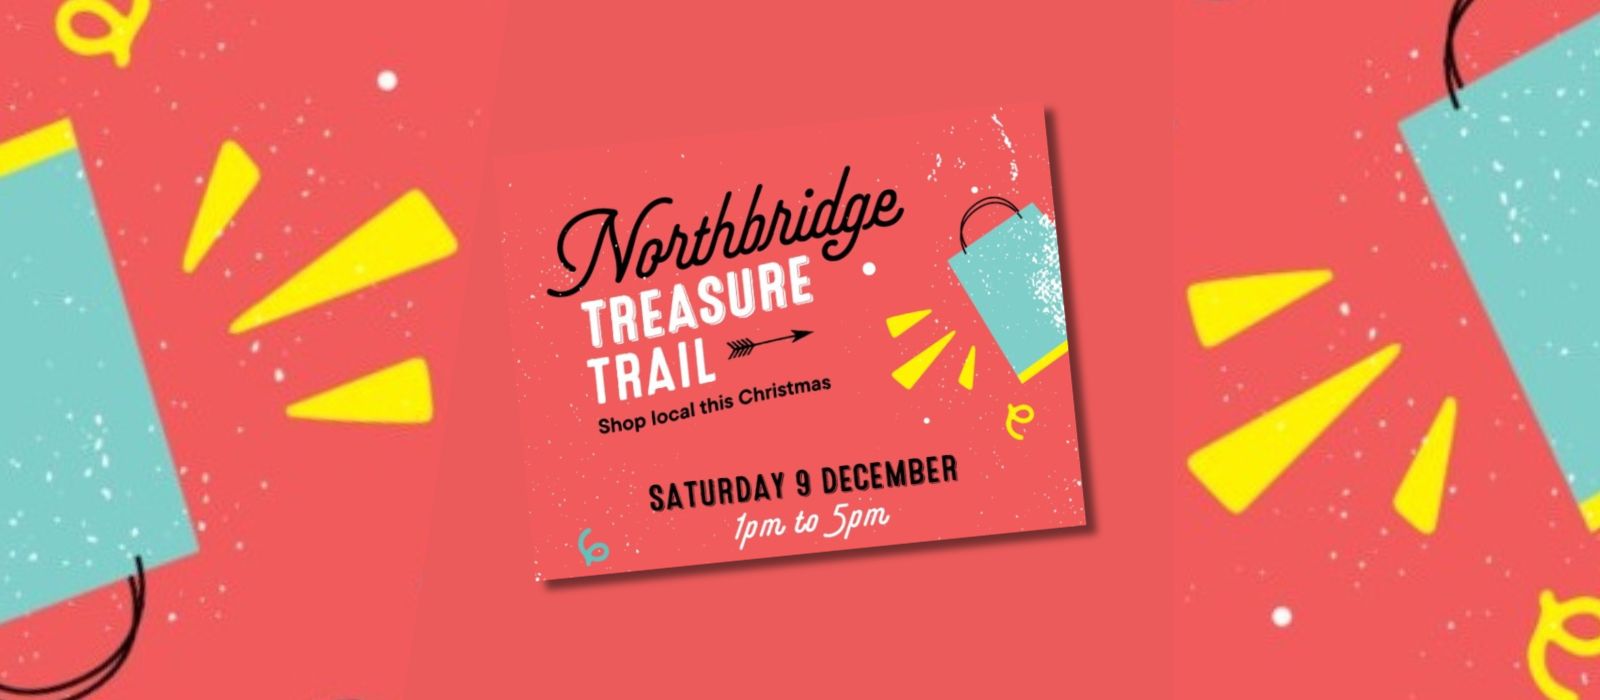 Northbridge Treasure Trail